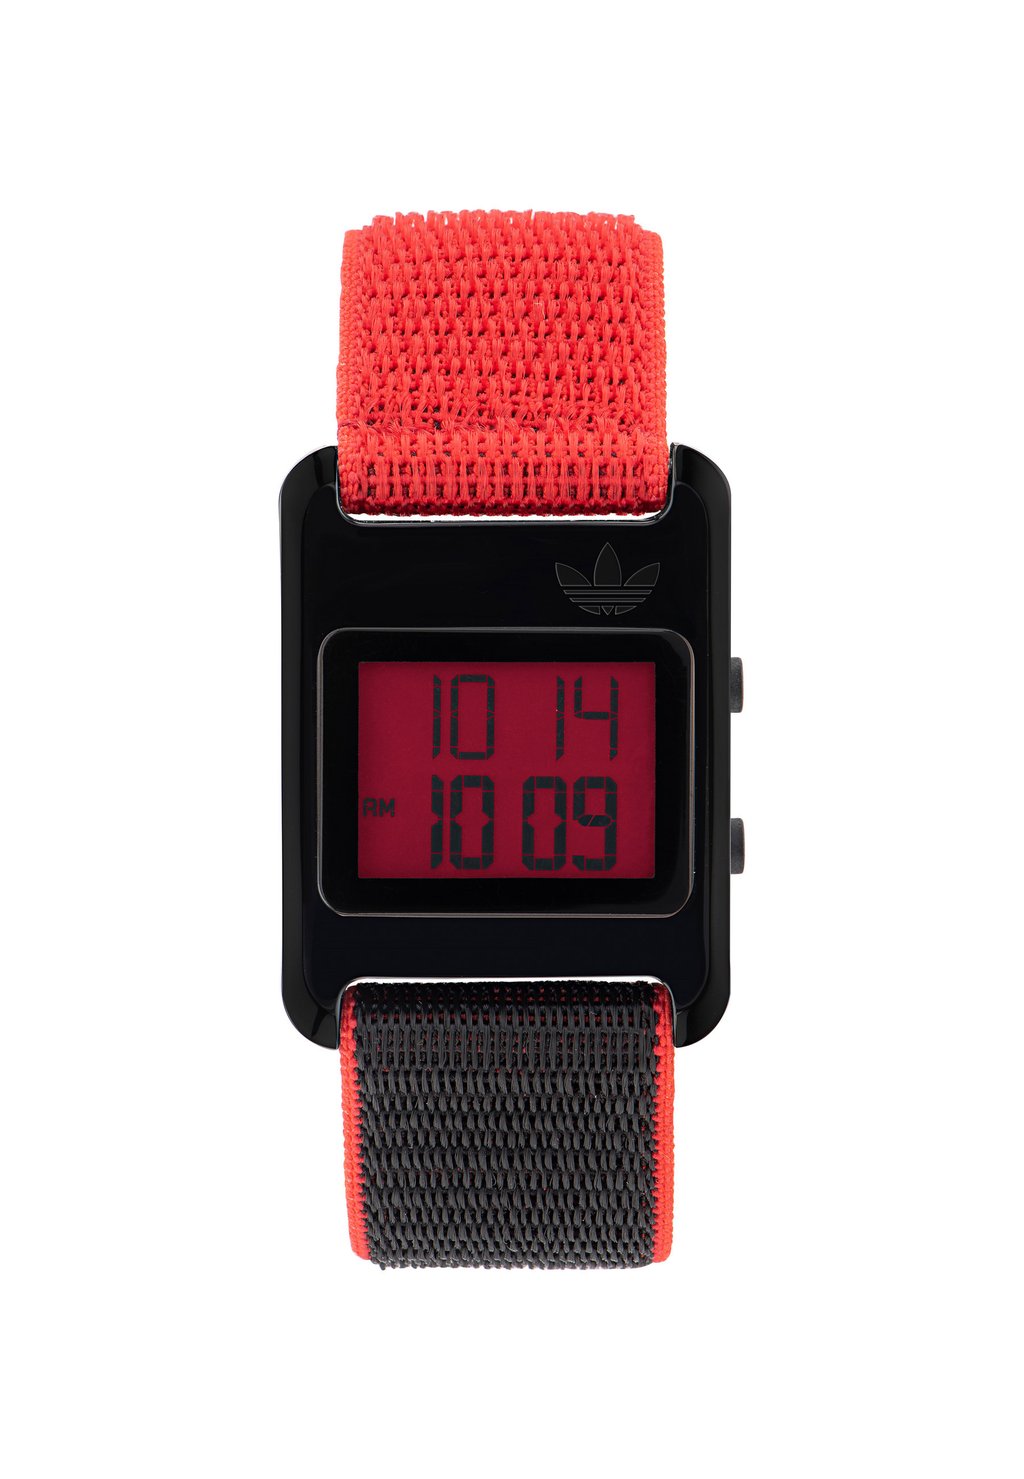 Цифровые часы Retro Pop Digital adidas Originals, цвет black and red банкетка red and black ceres